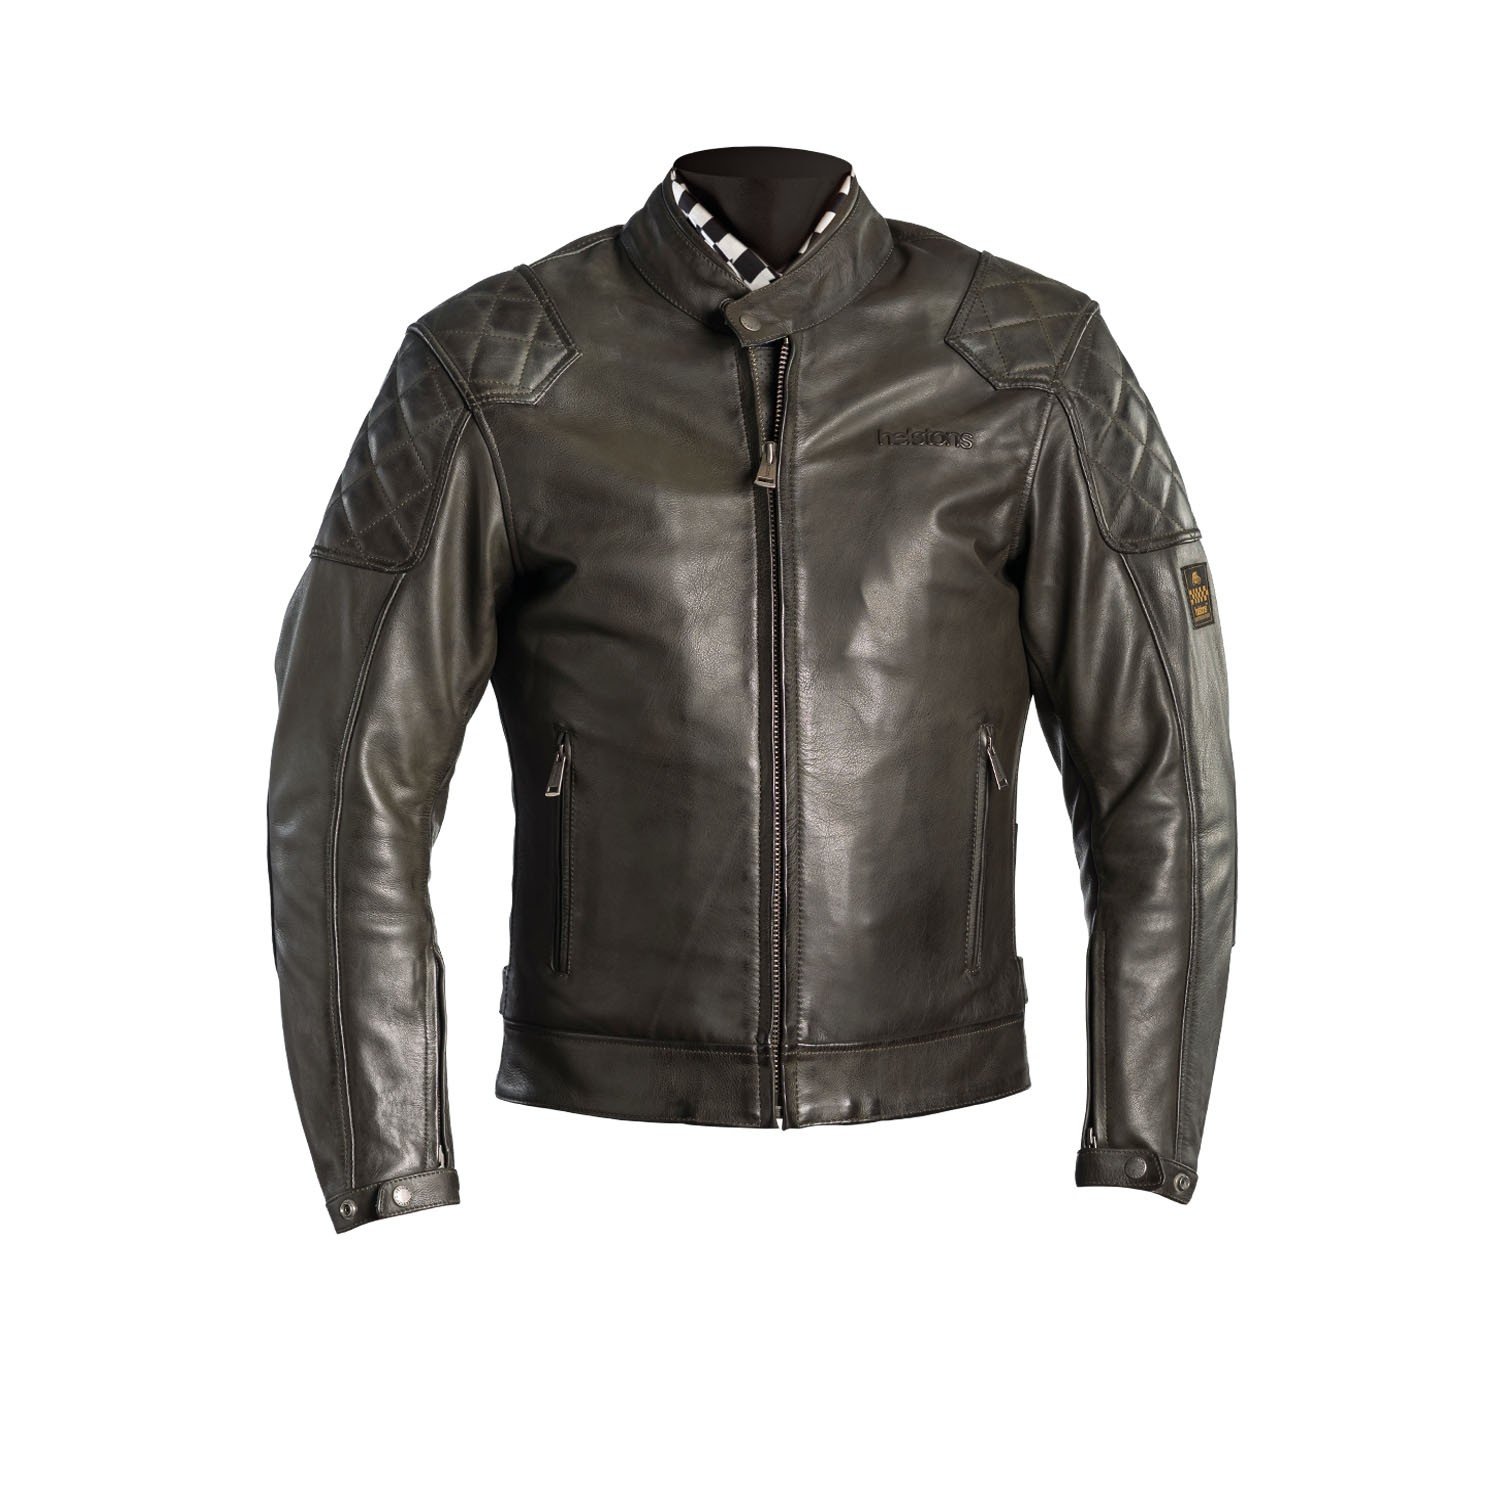 Image of Helstons Scoty Natural Jacket Khaki Size S ID 3662136065116